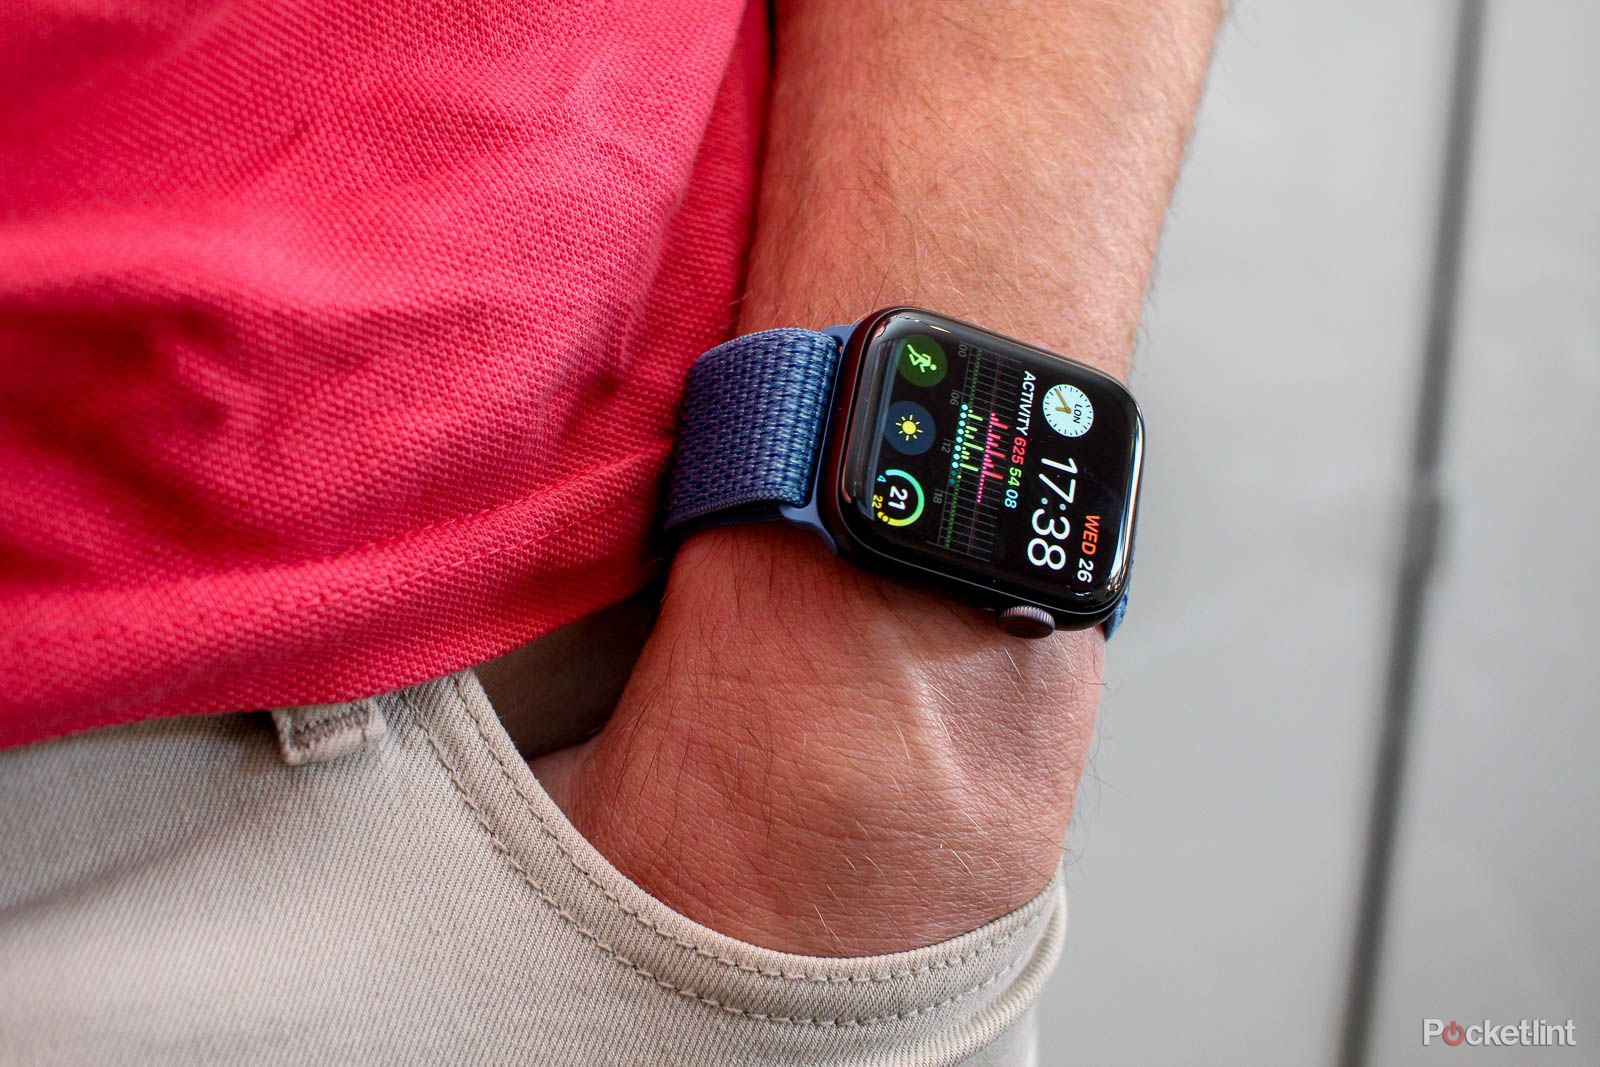 O2 customers get Apple Watch Series 4 at last